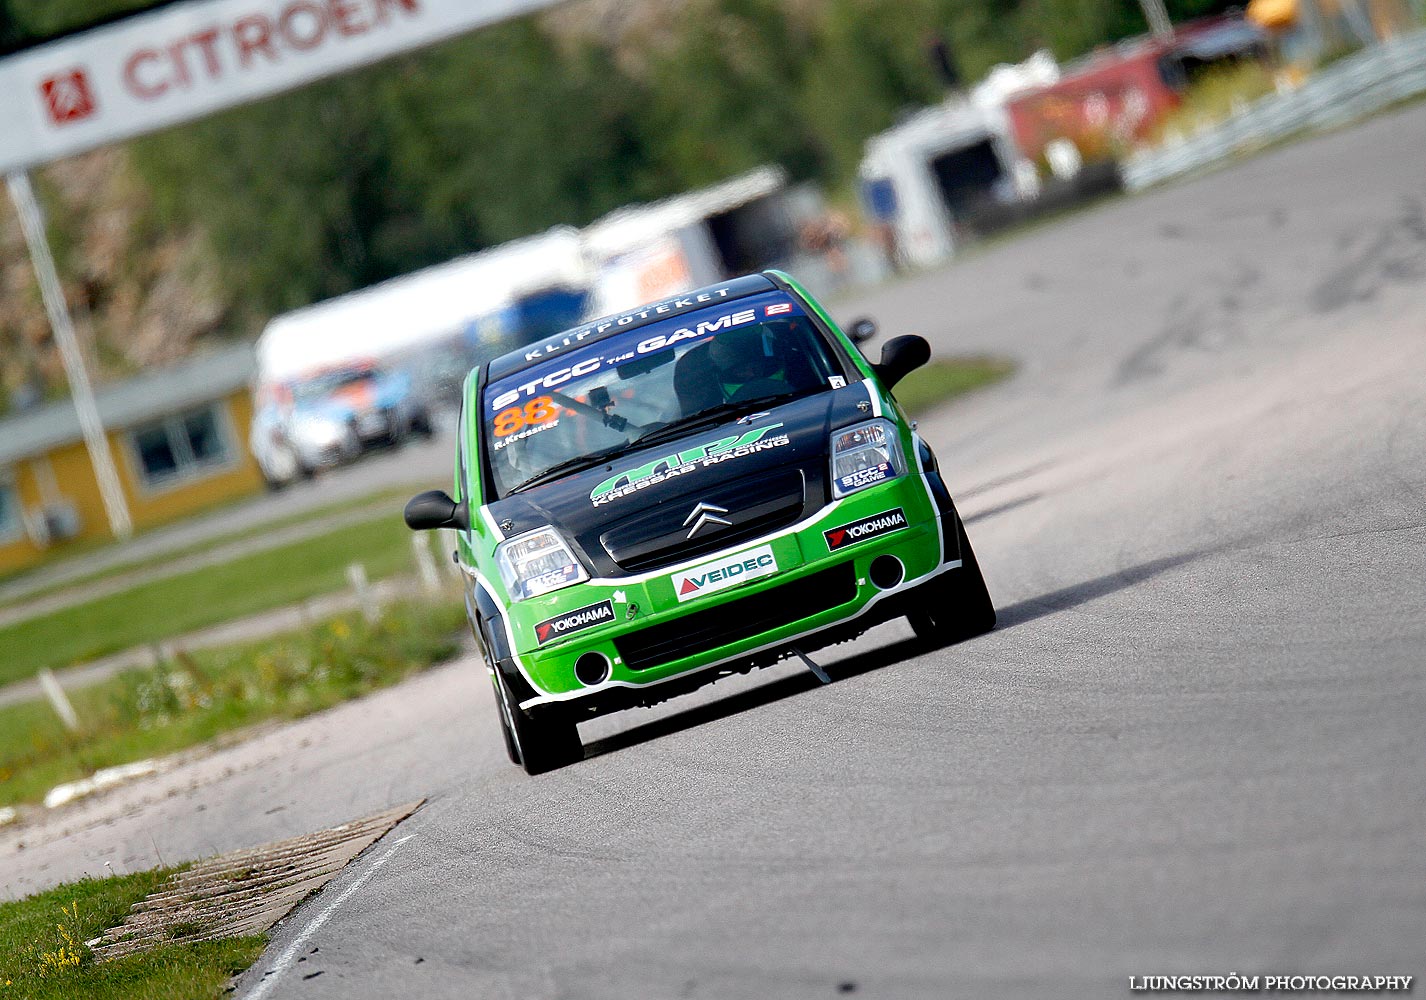 SSK Raceweek,mix,Kinnekulle Ring,Götene,Sverige,Motorsport,,2011,44499